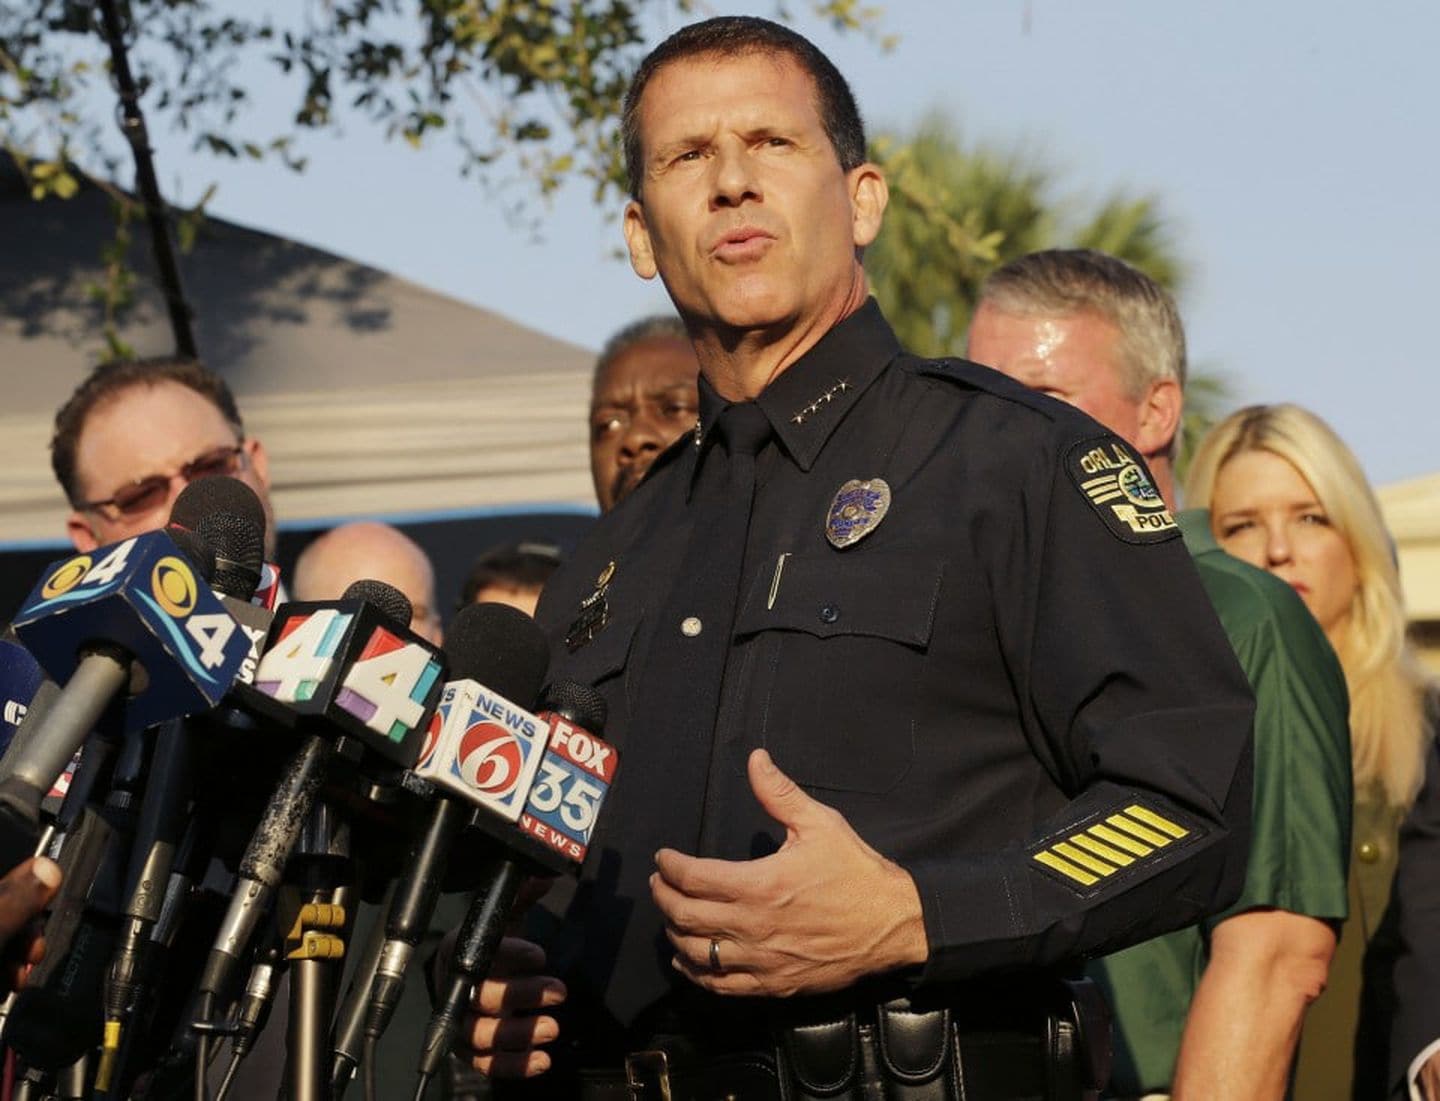 âIf youâre alive, raise your handâ: Orlando police detail response to ...